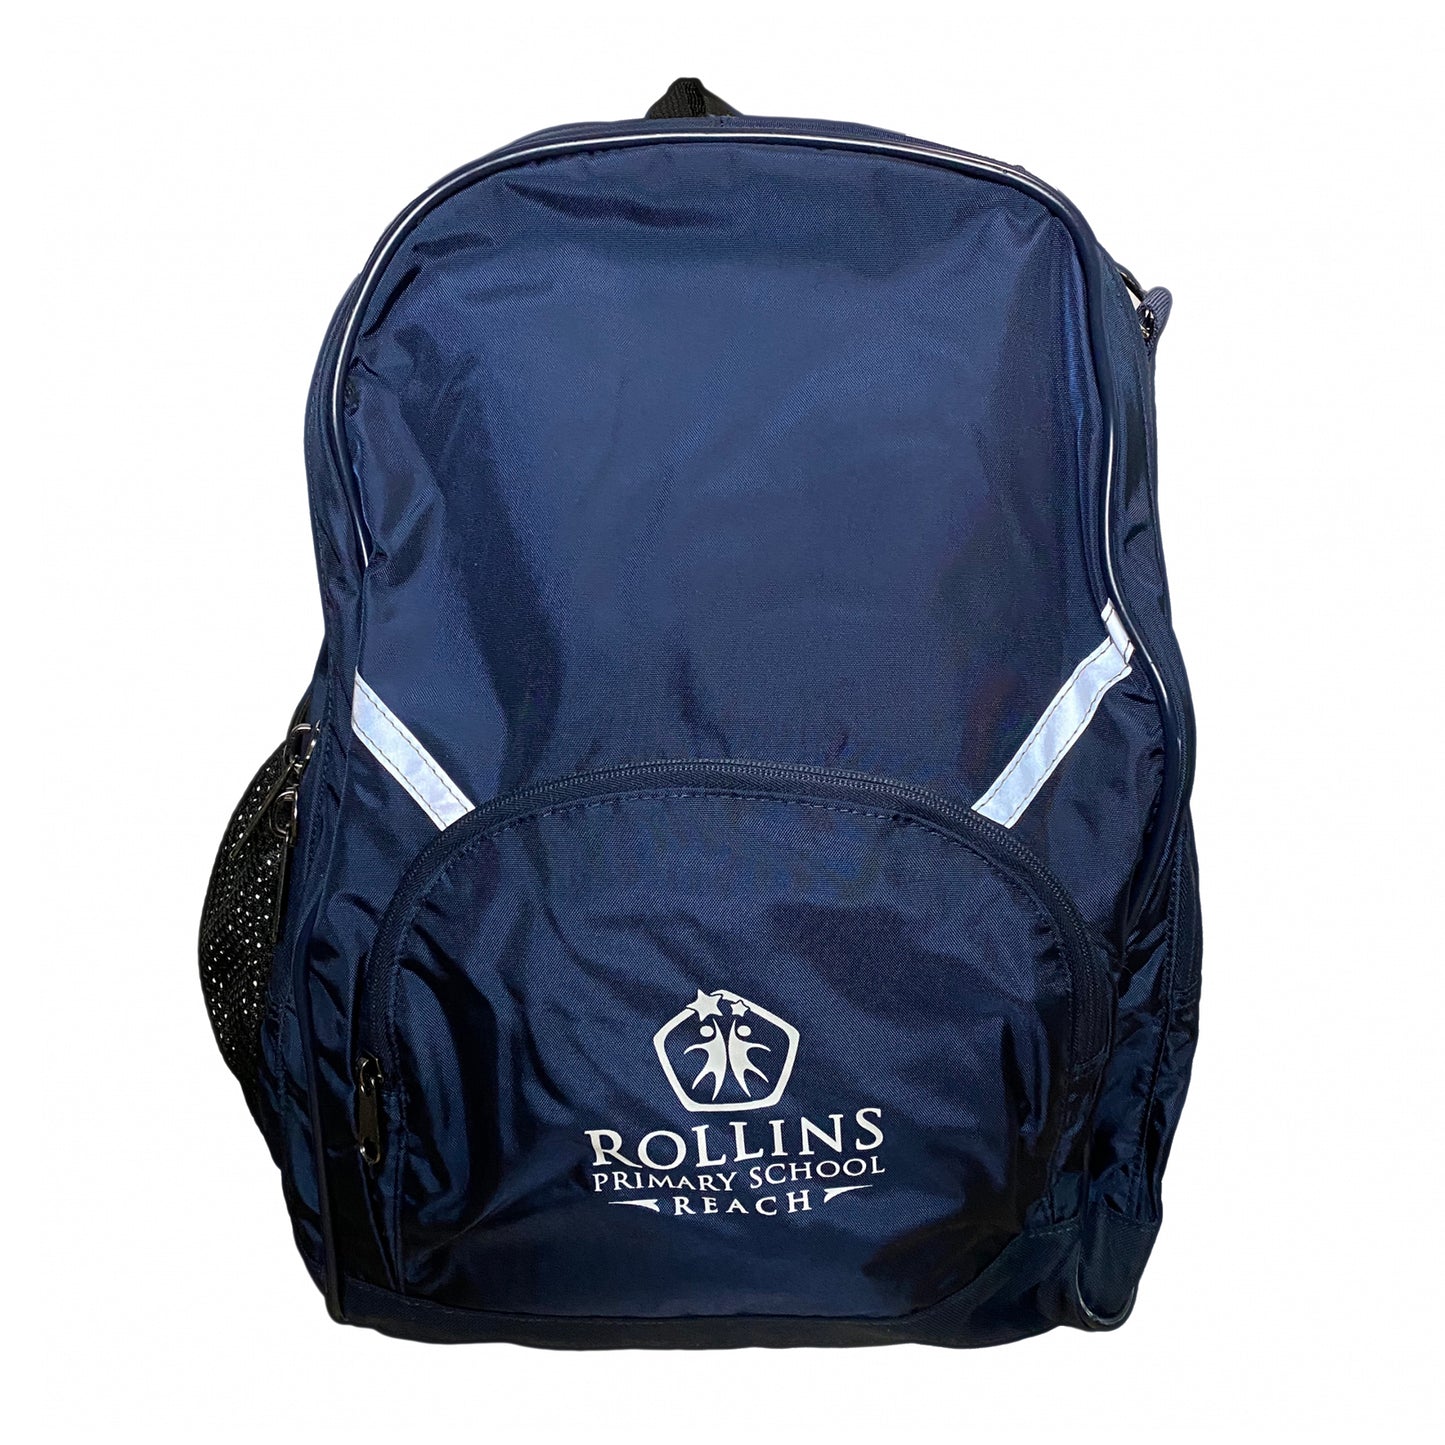 ROLLINS PRIMARY SCHOOL BAG